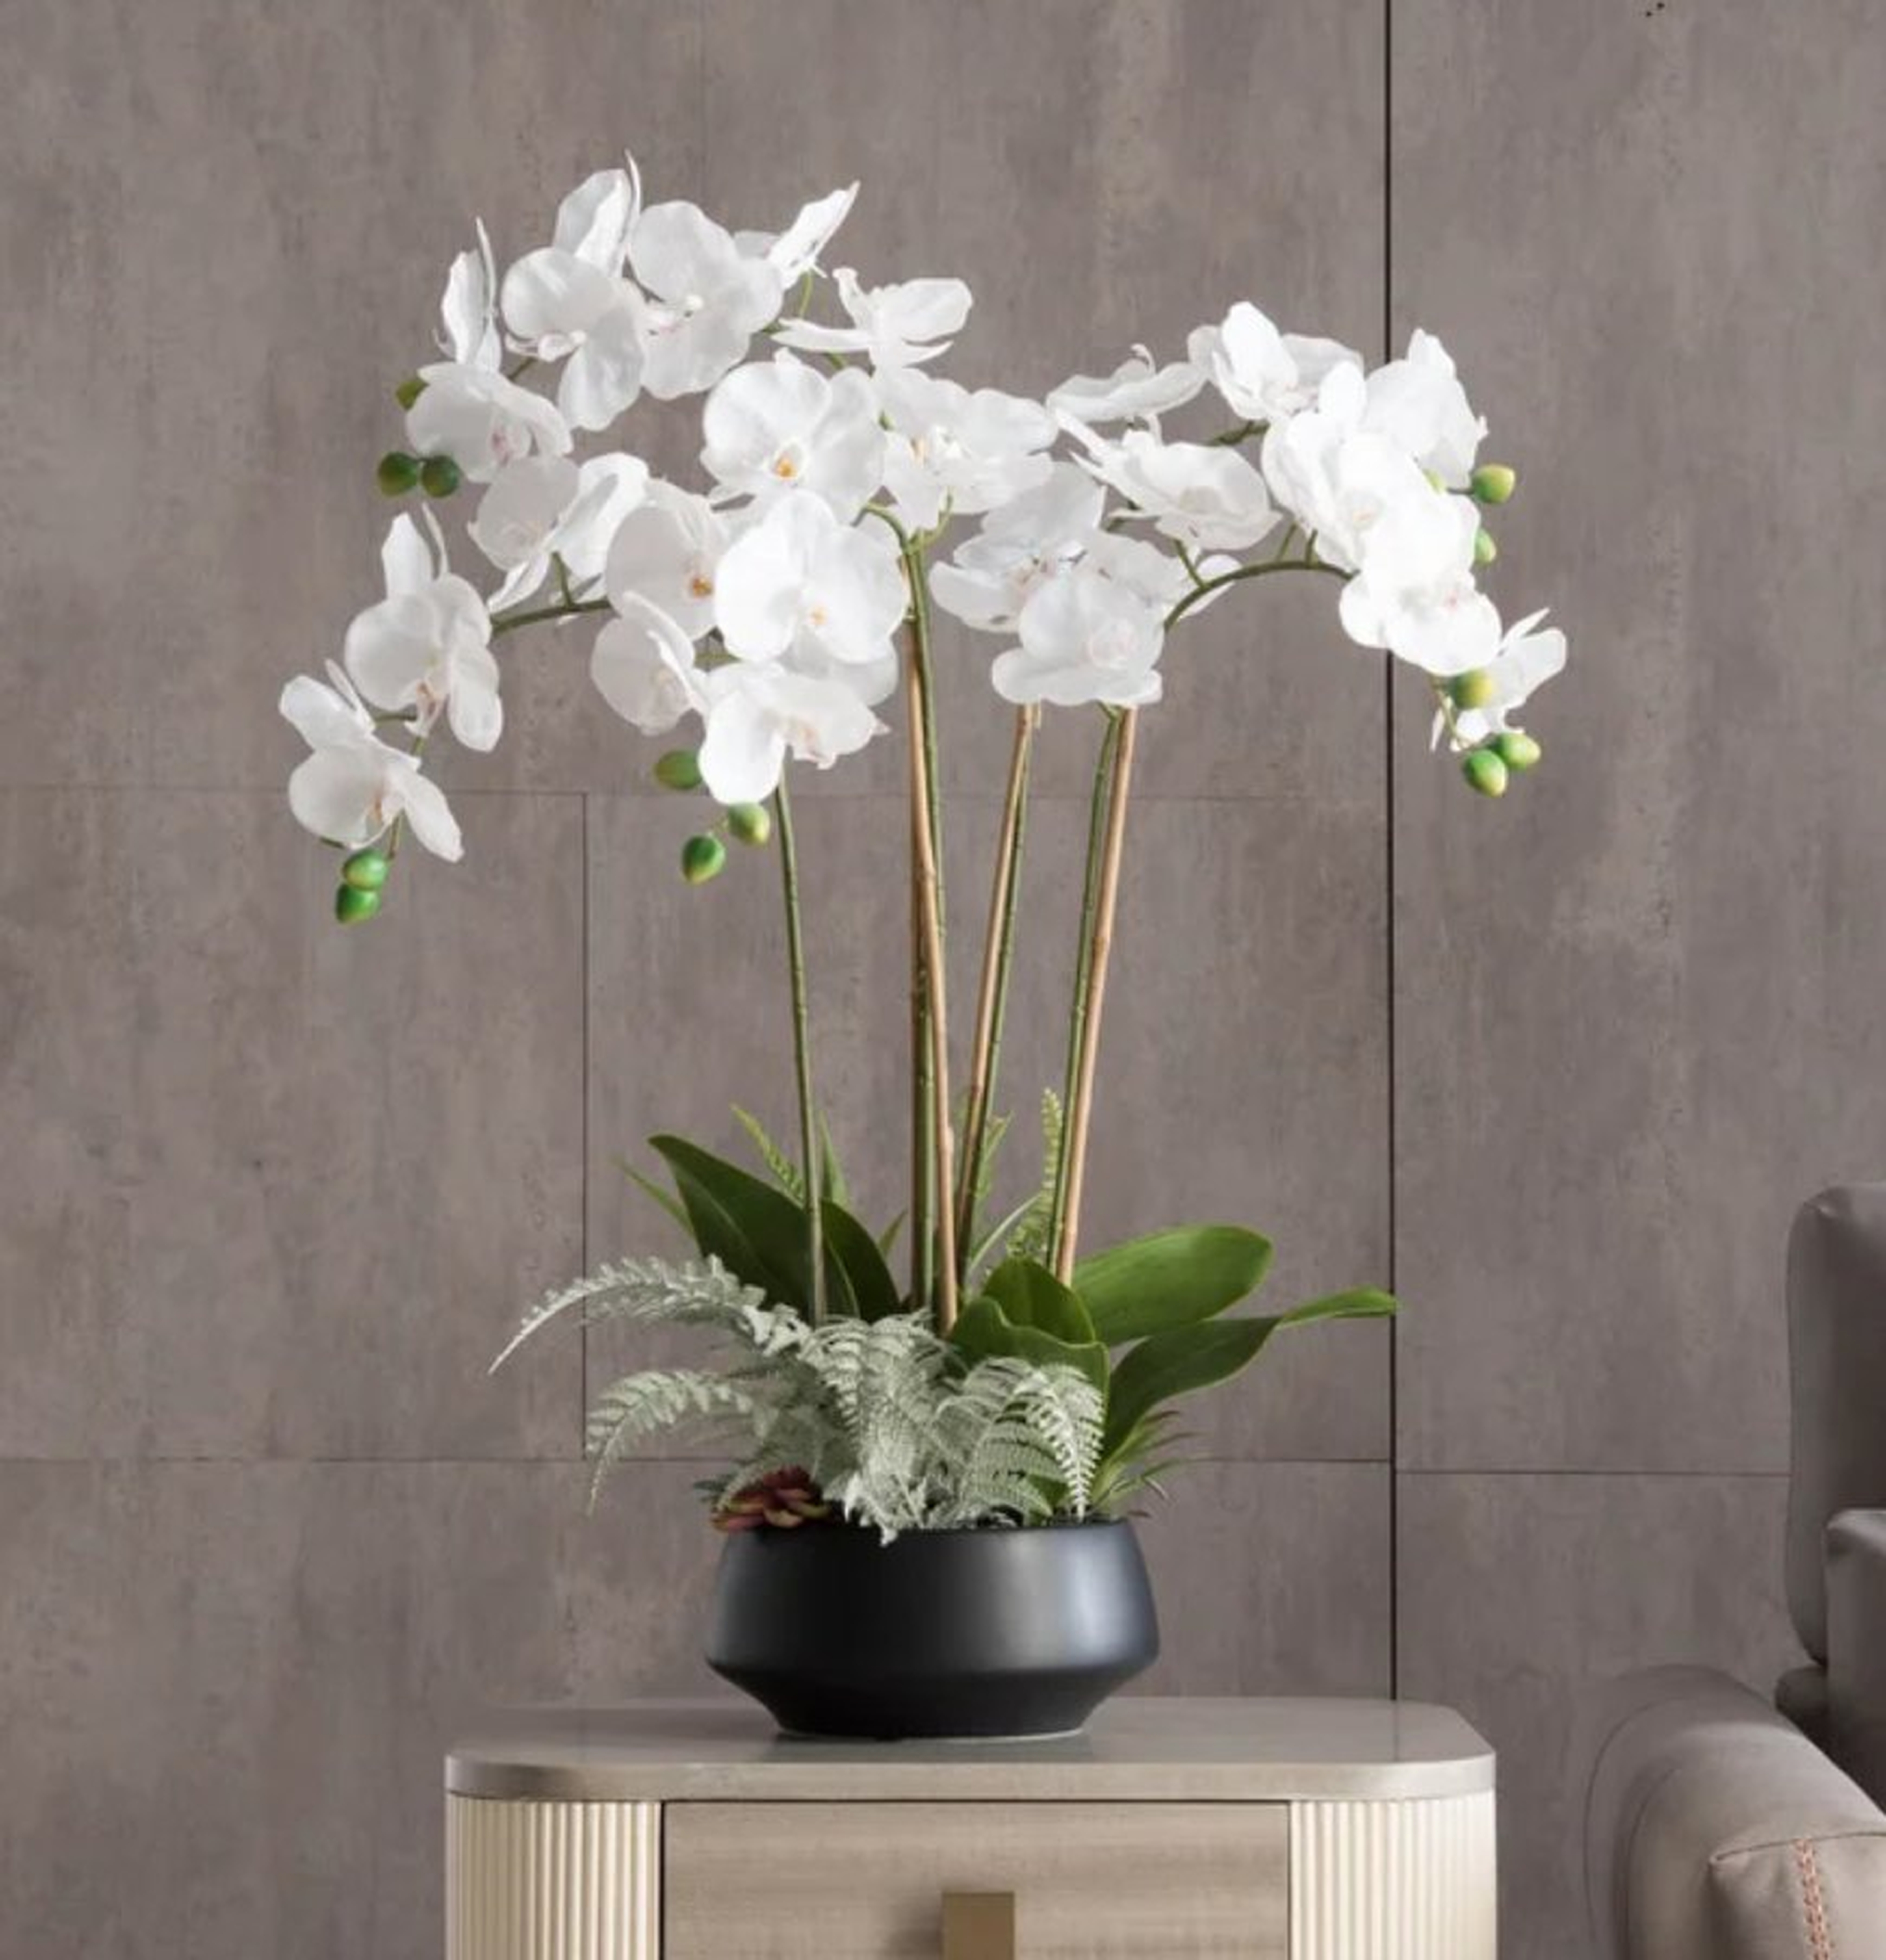 Orchid Floral Centerpiece in Pot - Wayfair